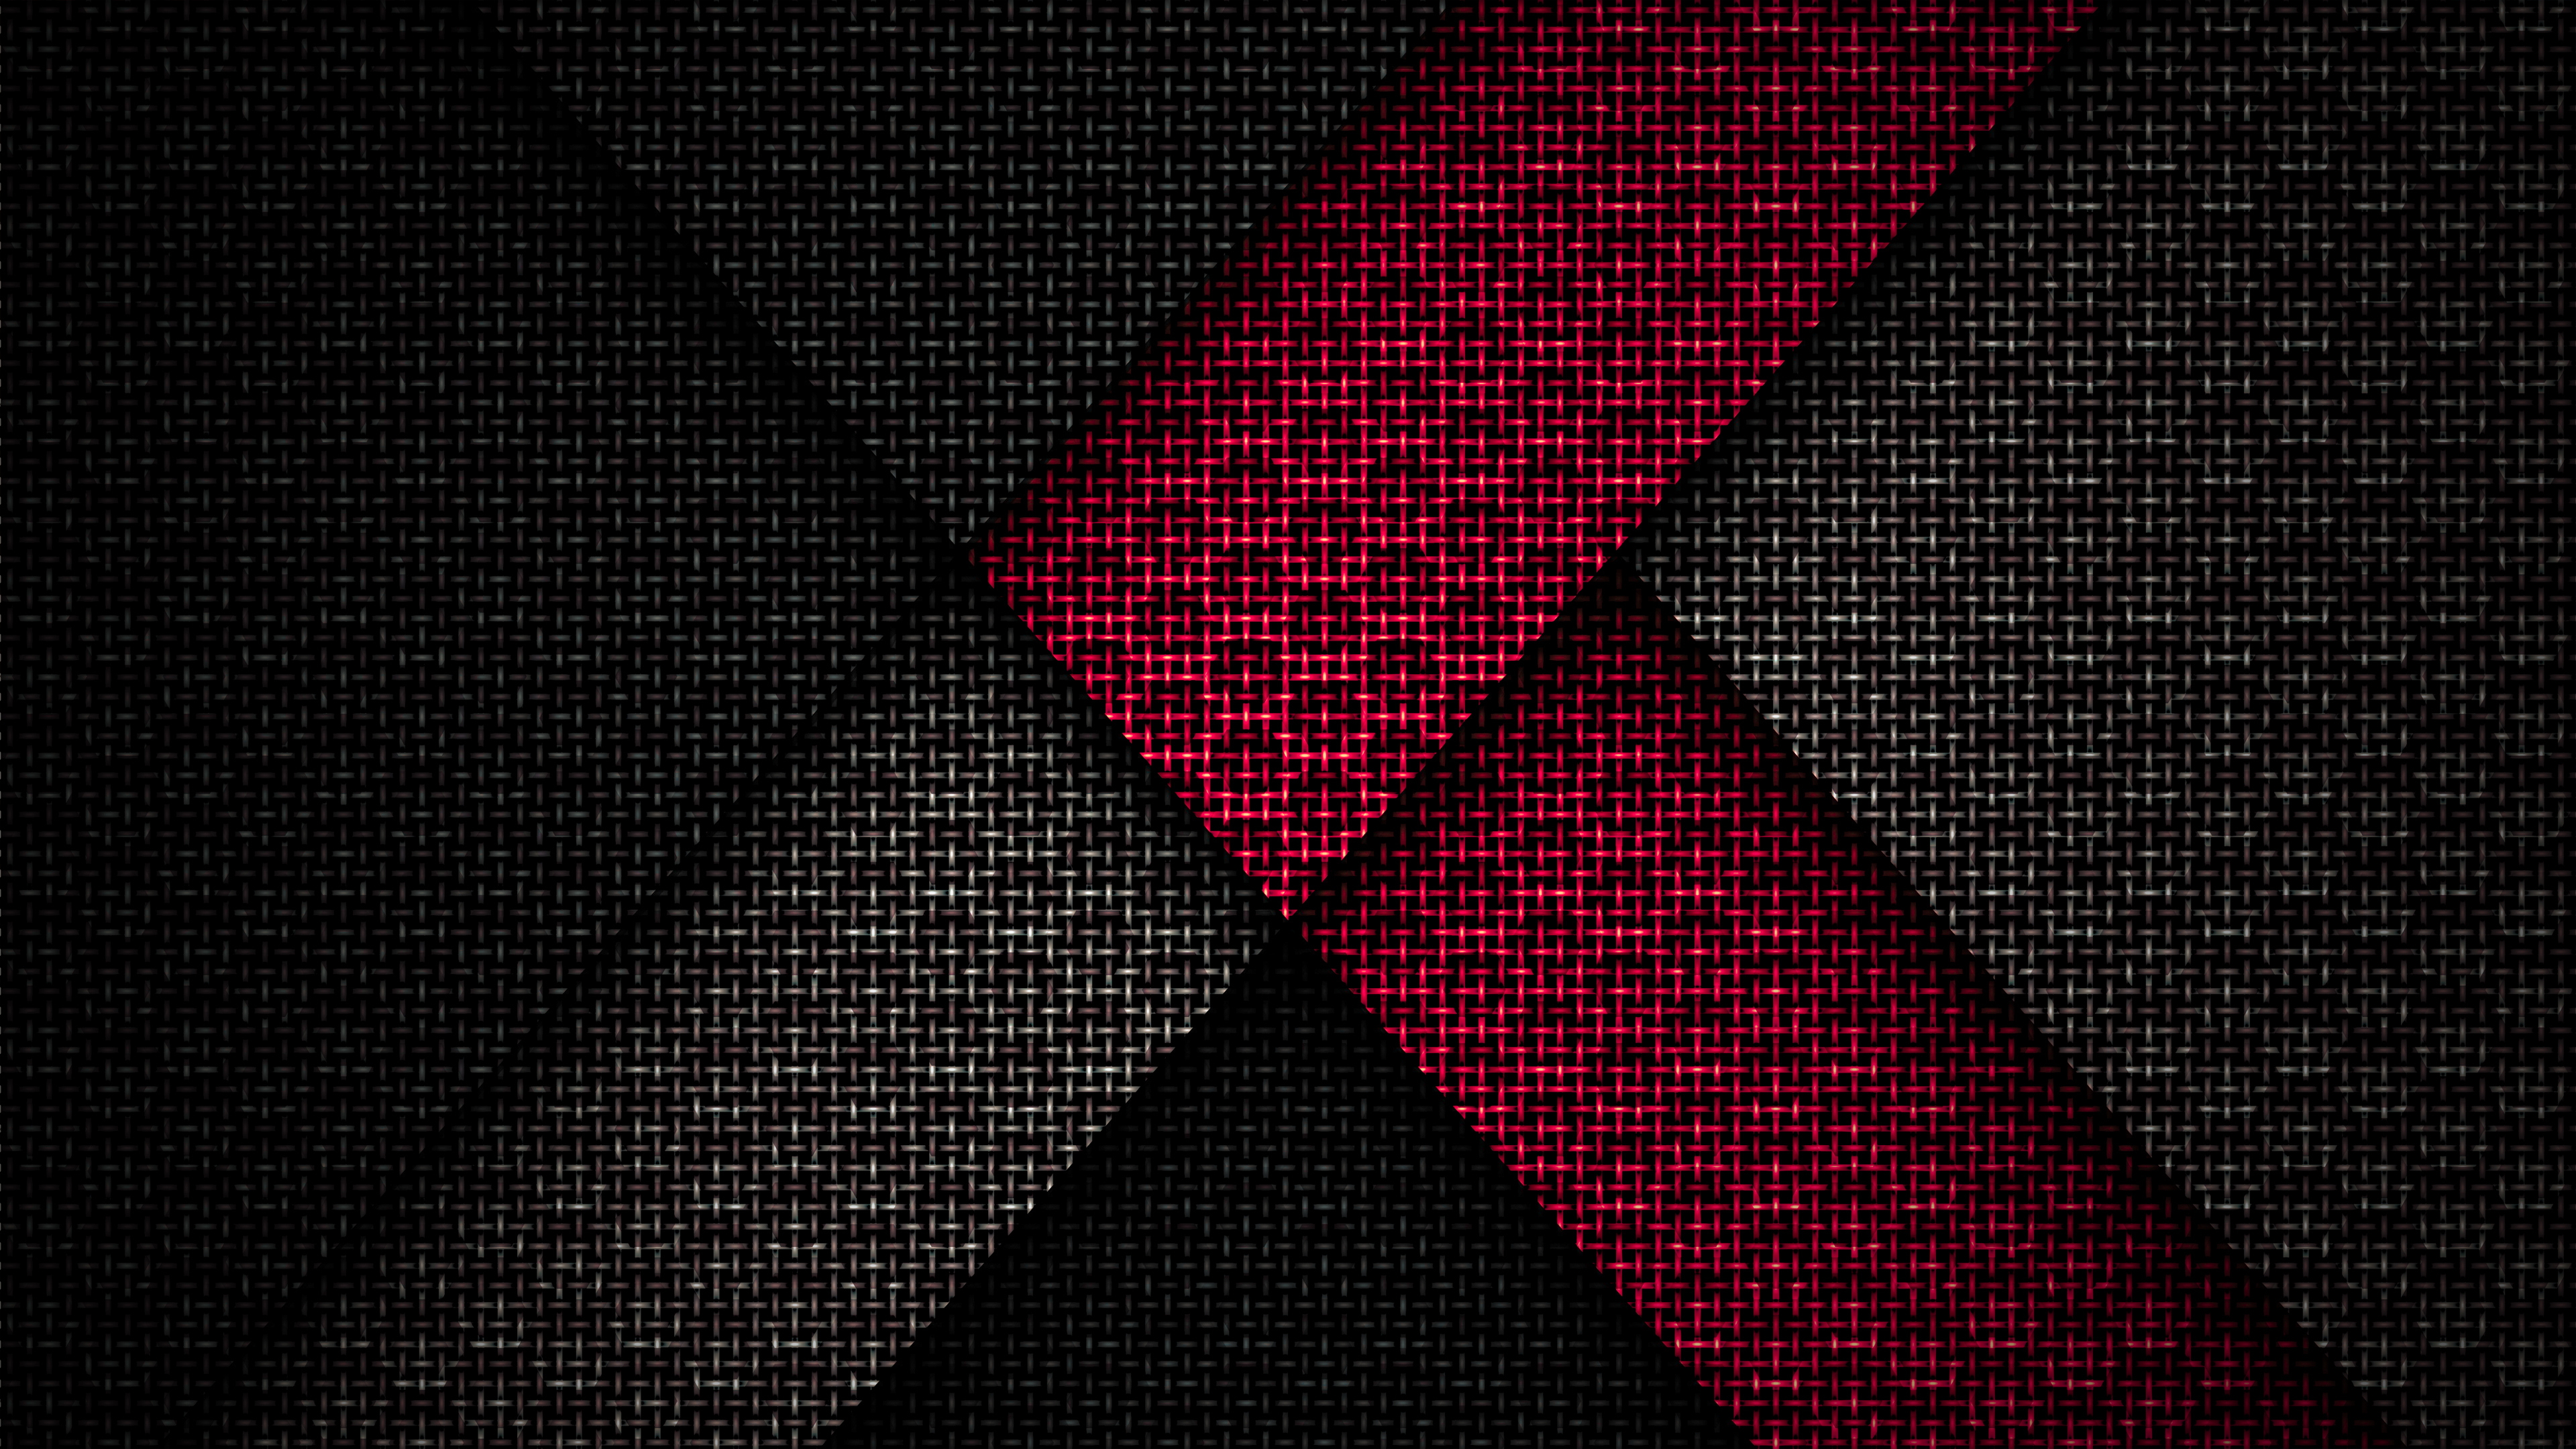 Download wallpaper 3840x2160 red-black texture, abstract, pride cross, art 4k  wallpaper, uhd wallpaper, 16:9 widescreen 3840x2160 hd background, 23271